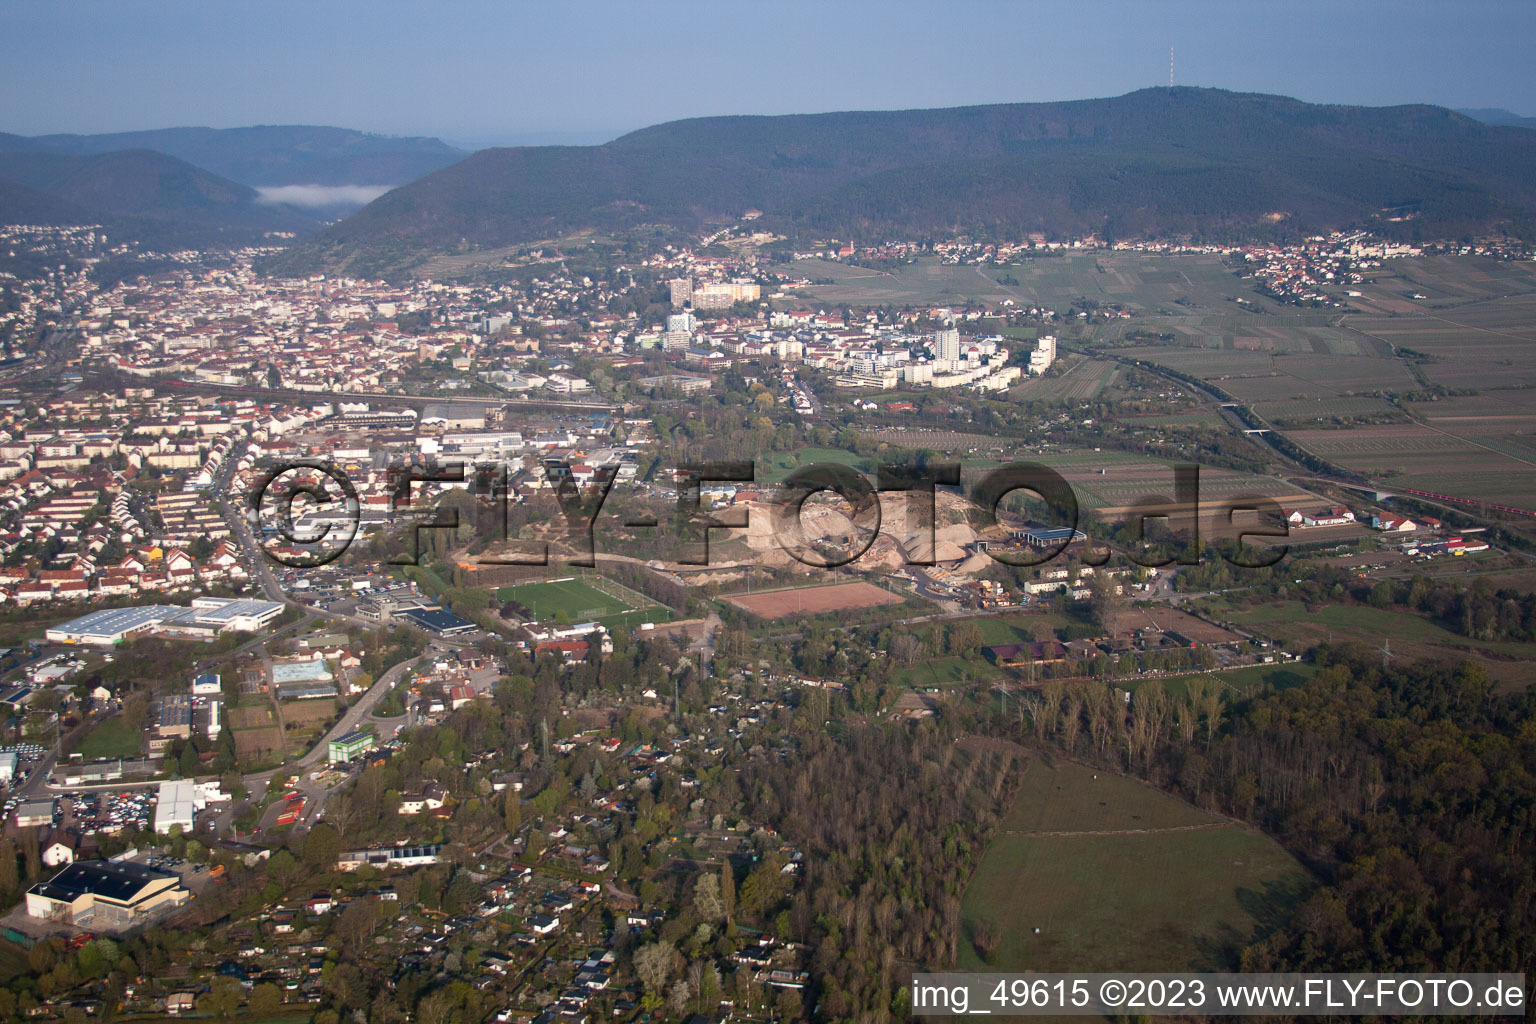 Neustadt an der Weinstraße in the state Rhineland-Palatinate, Germany viewn from the air